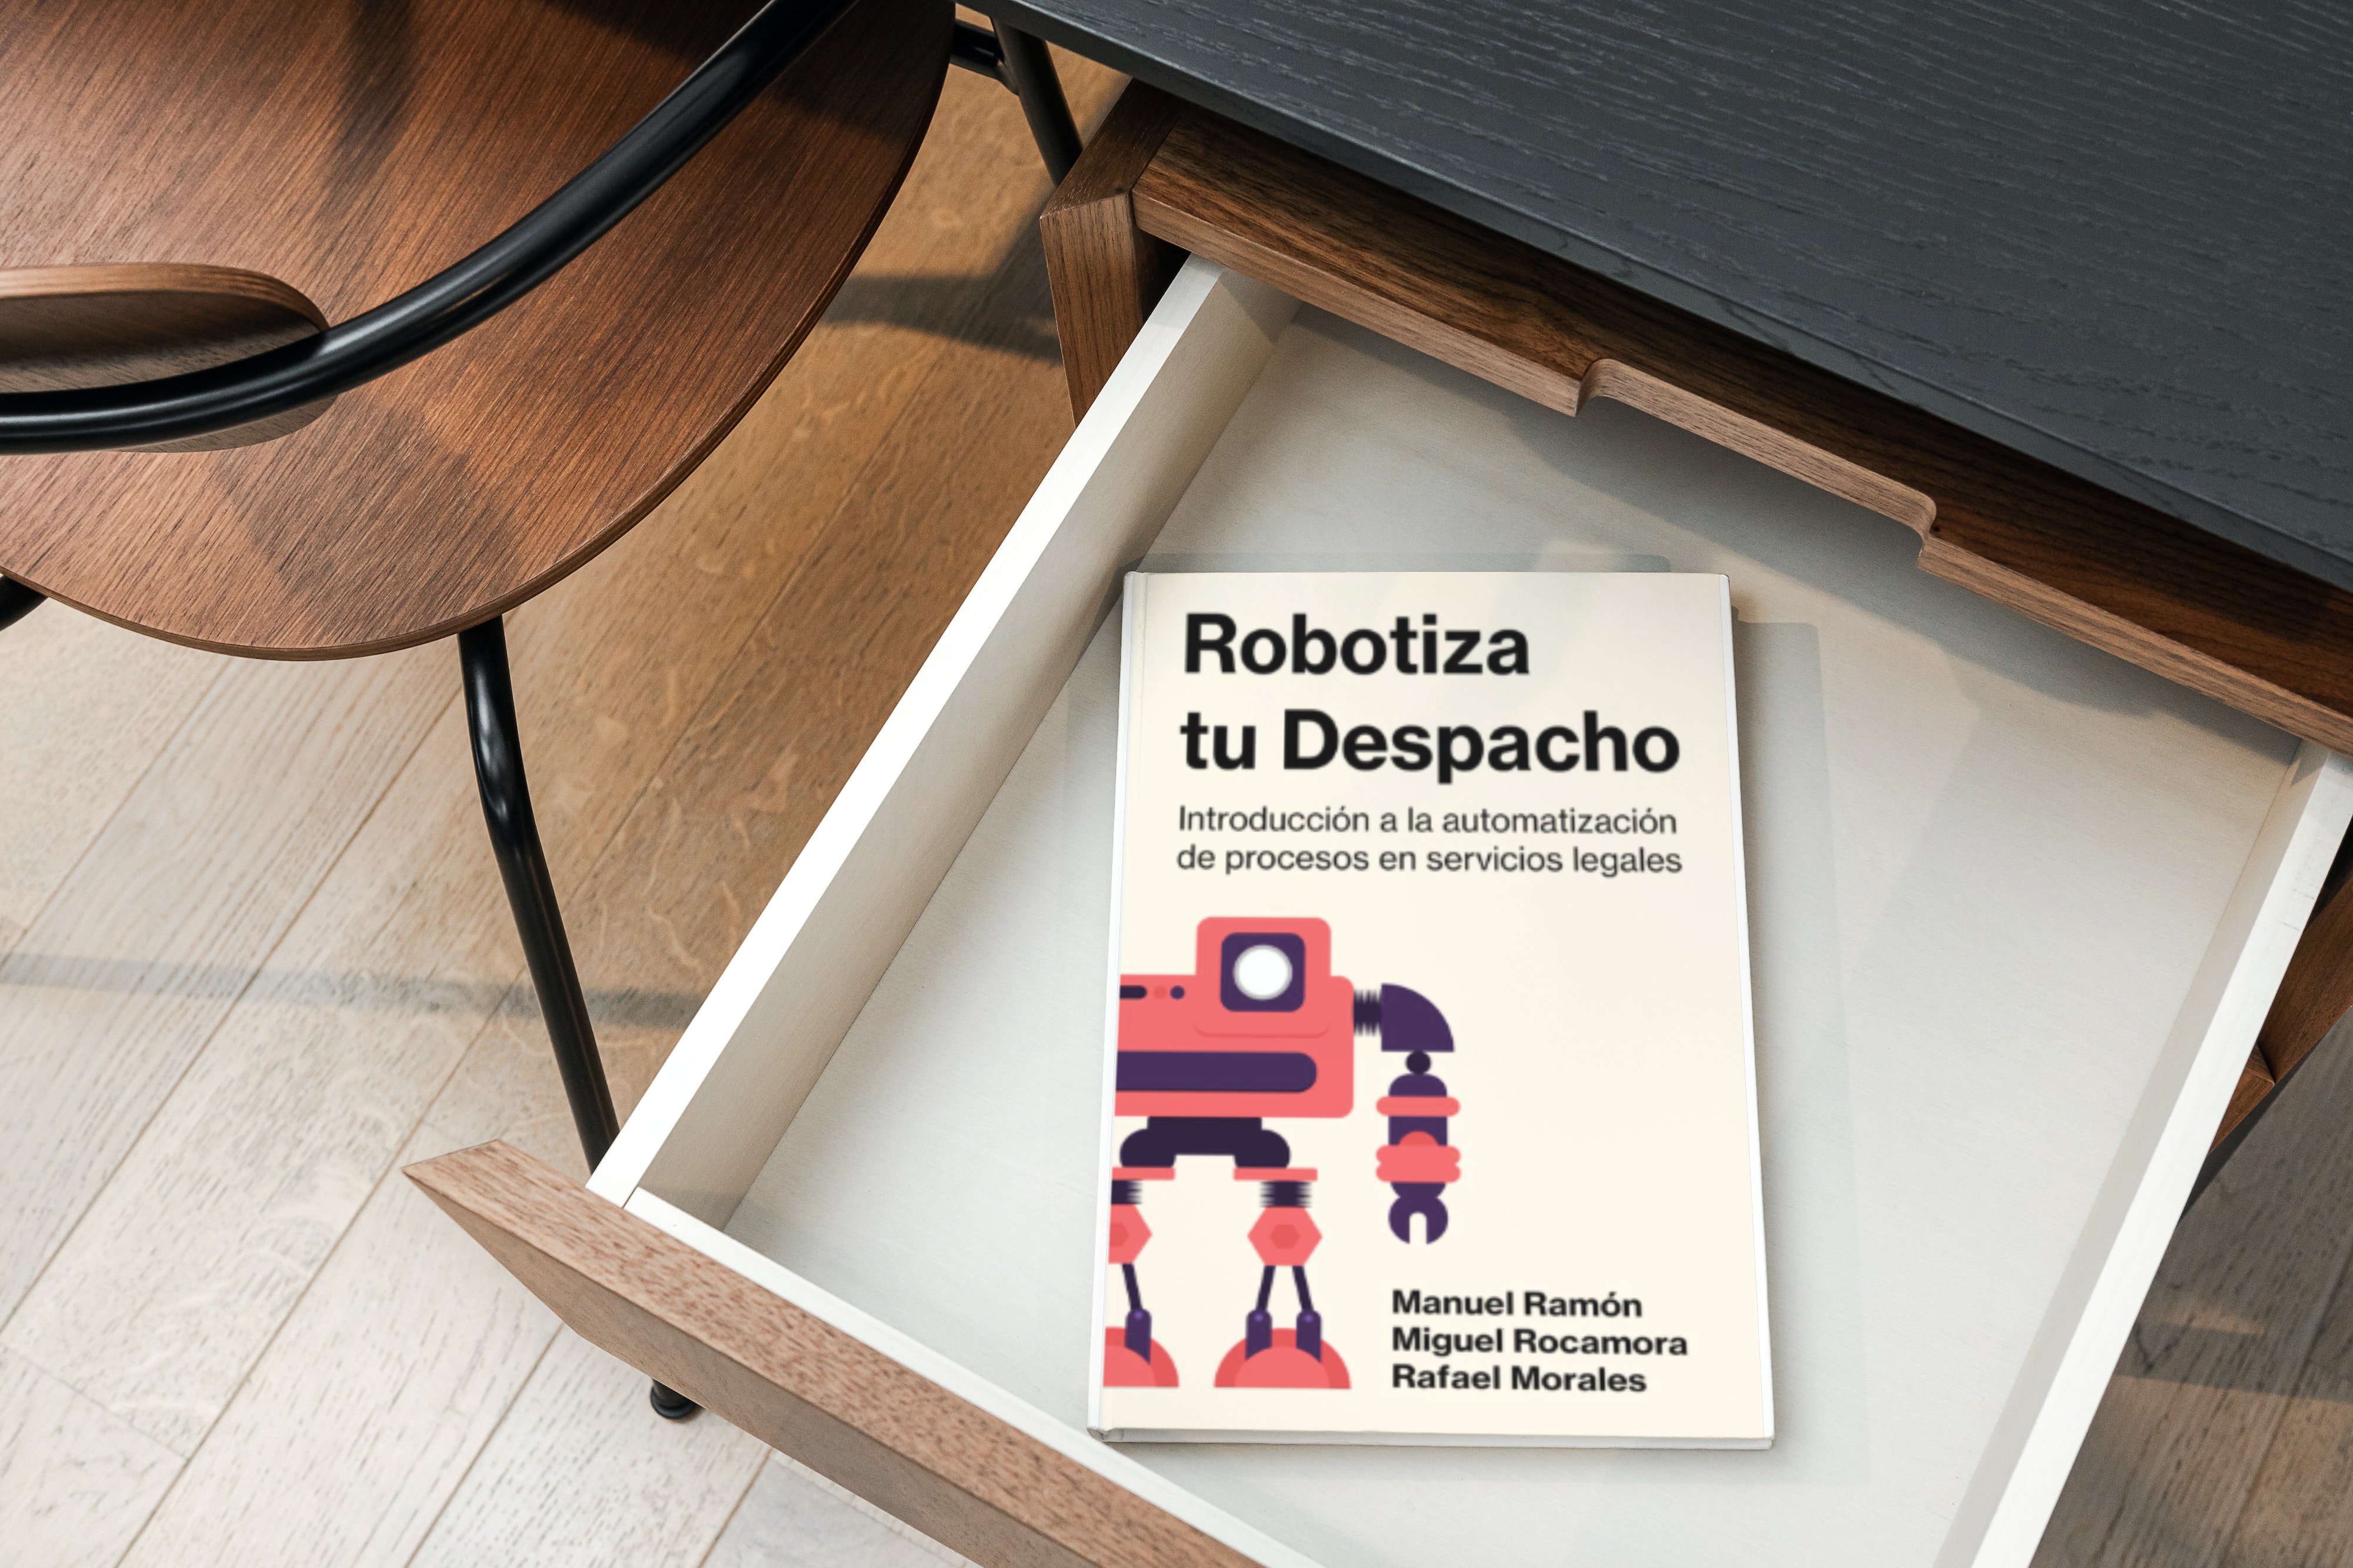 libro "robotiza tu despacho" en un cajón